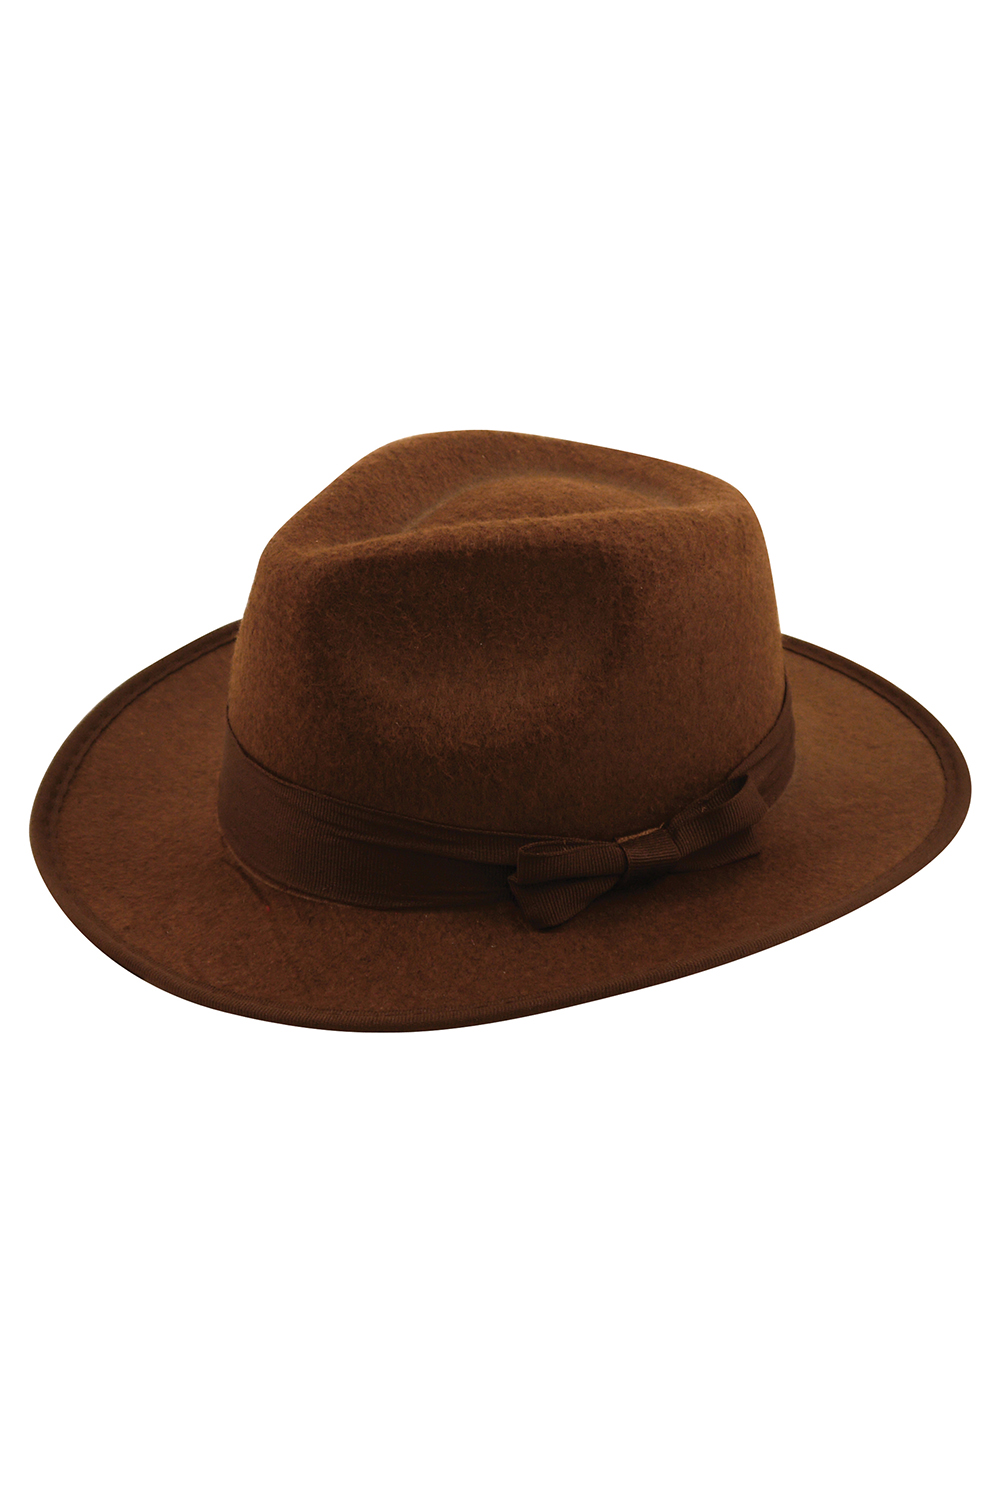 Adult Brown Explorer Hat